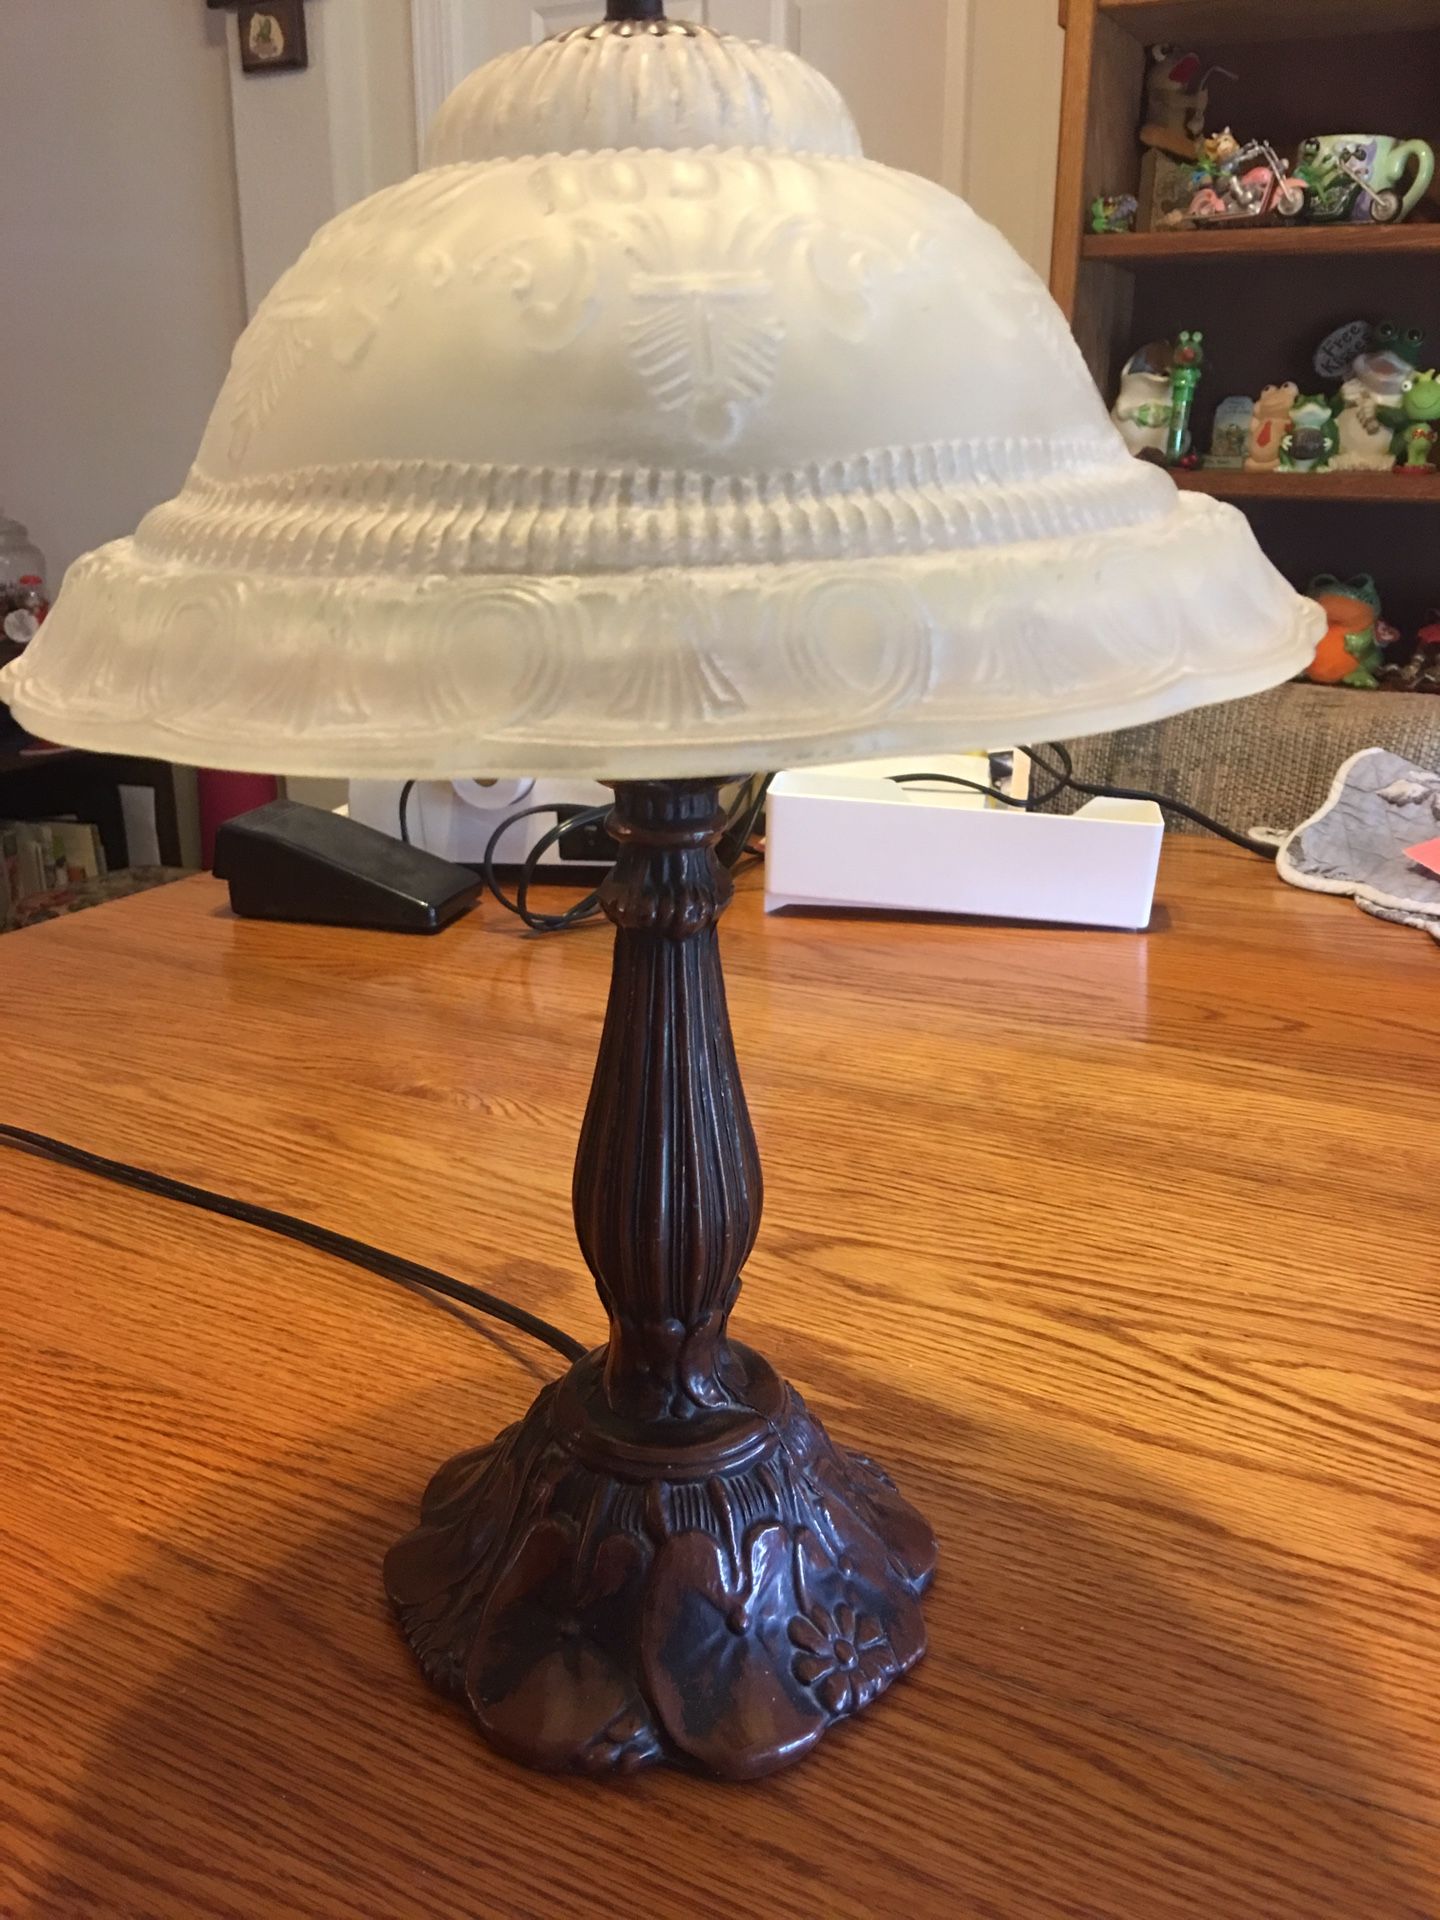 Vintage style lamp